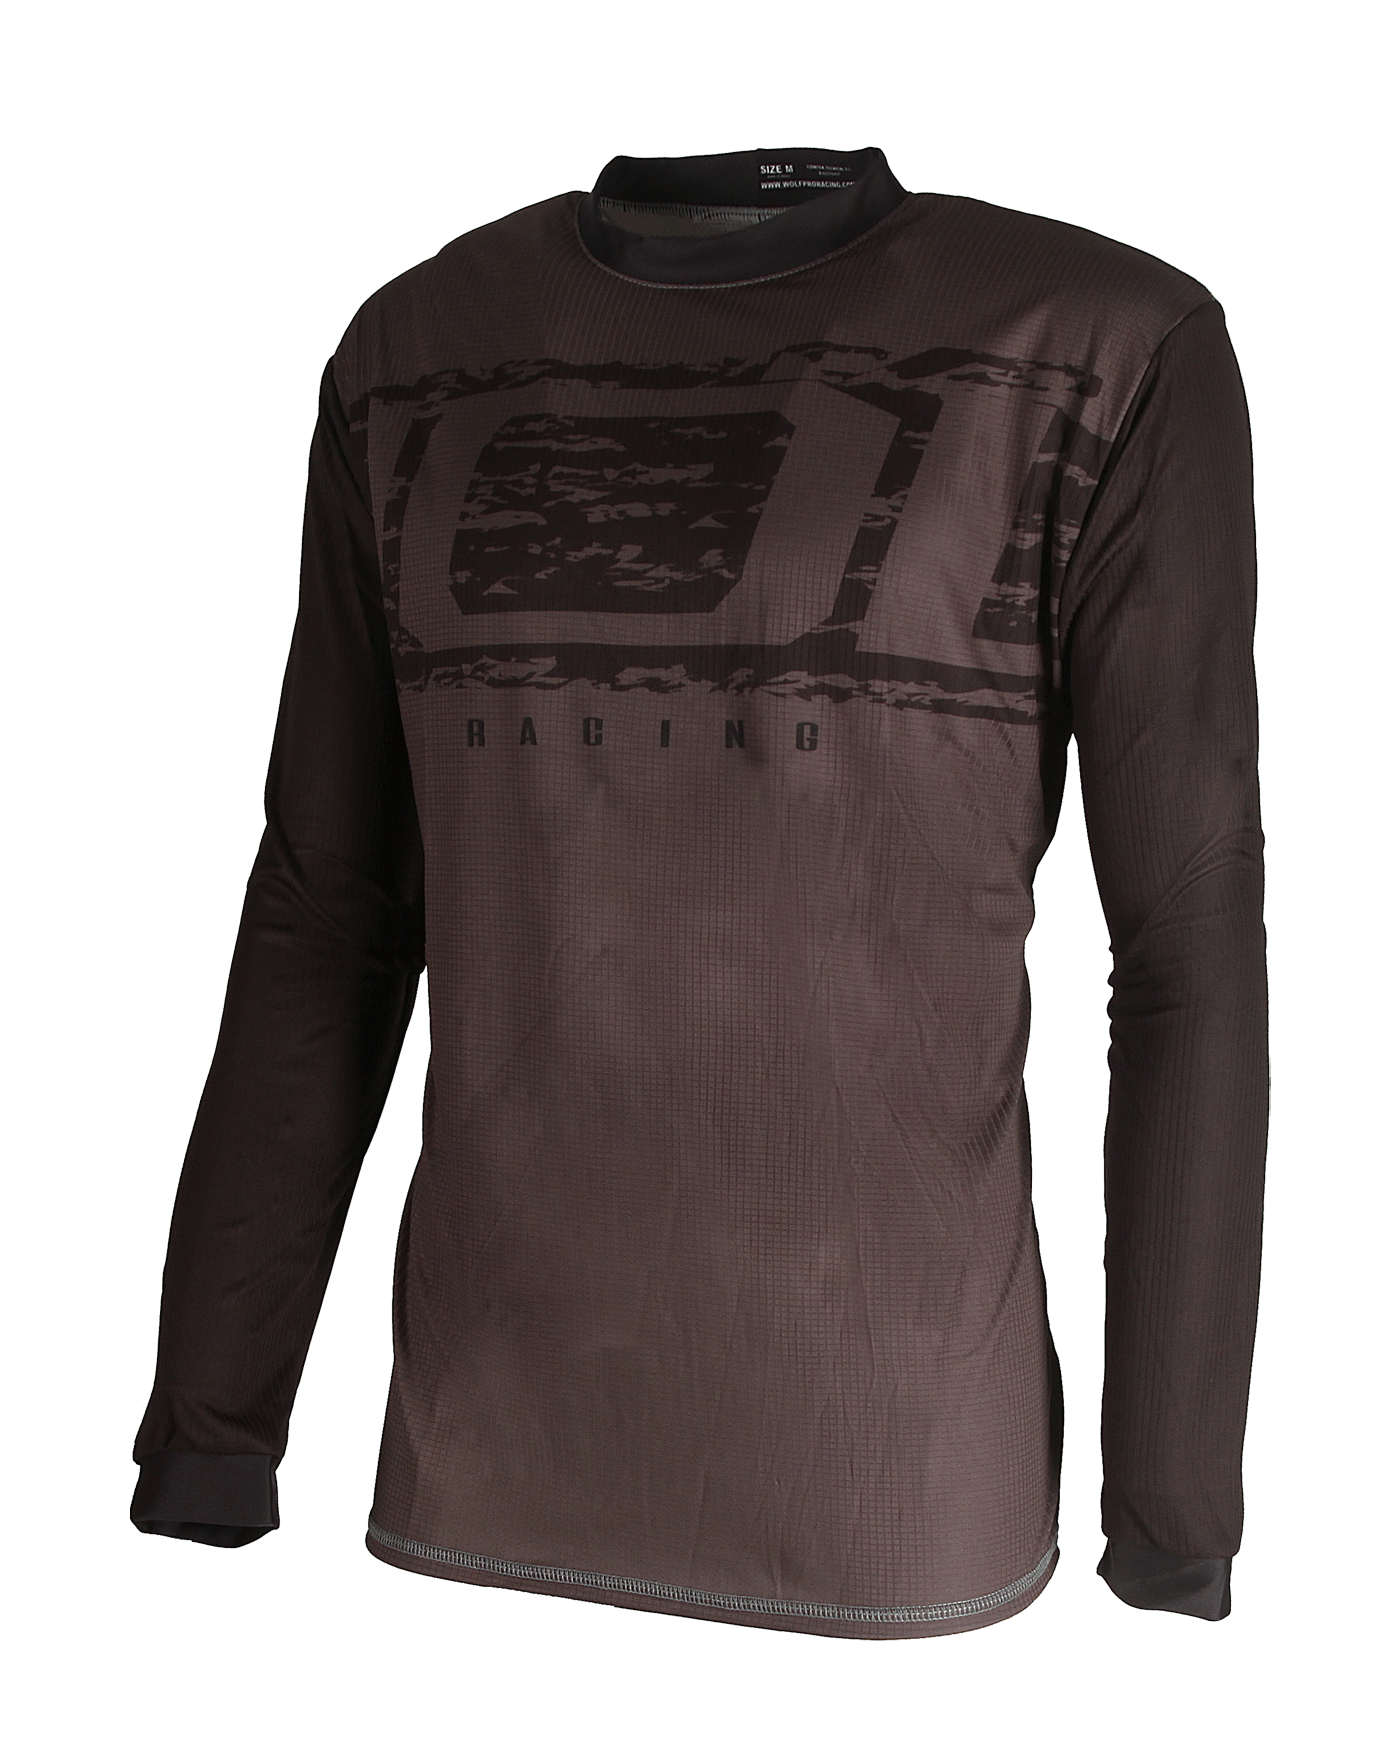 Camiseta Trial Blacky | Wolfpro racing - Ropa personalizada